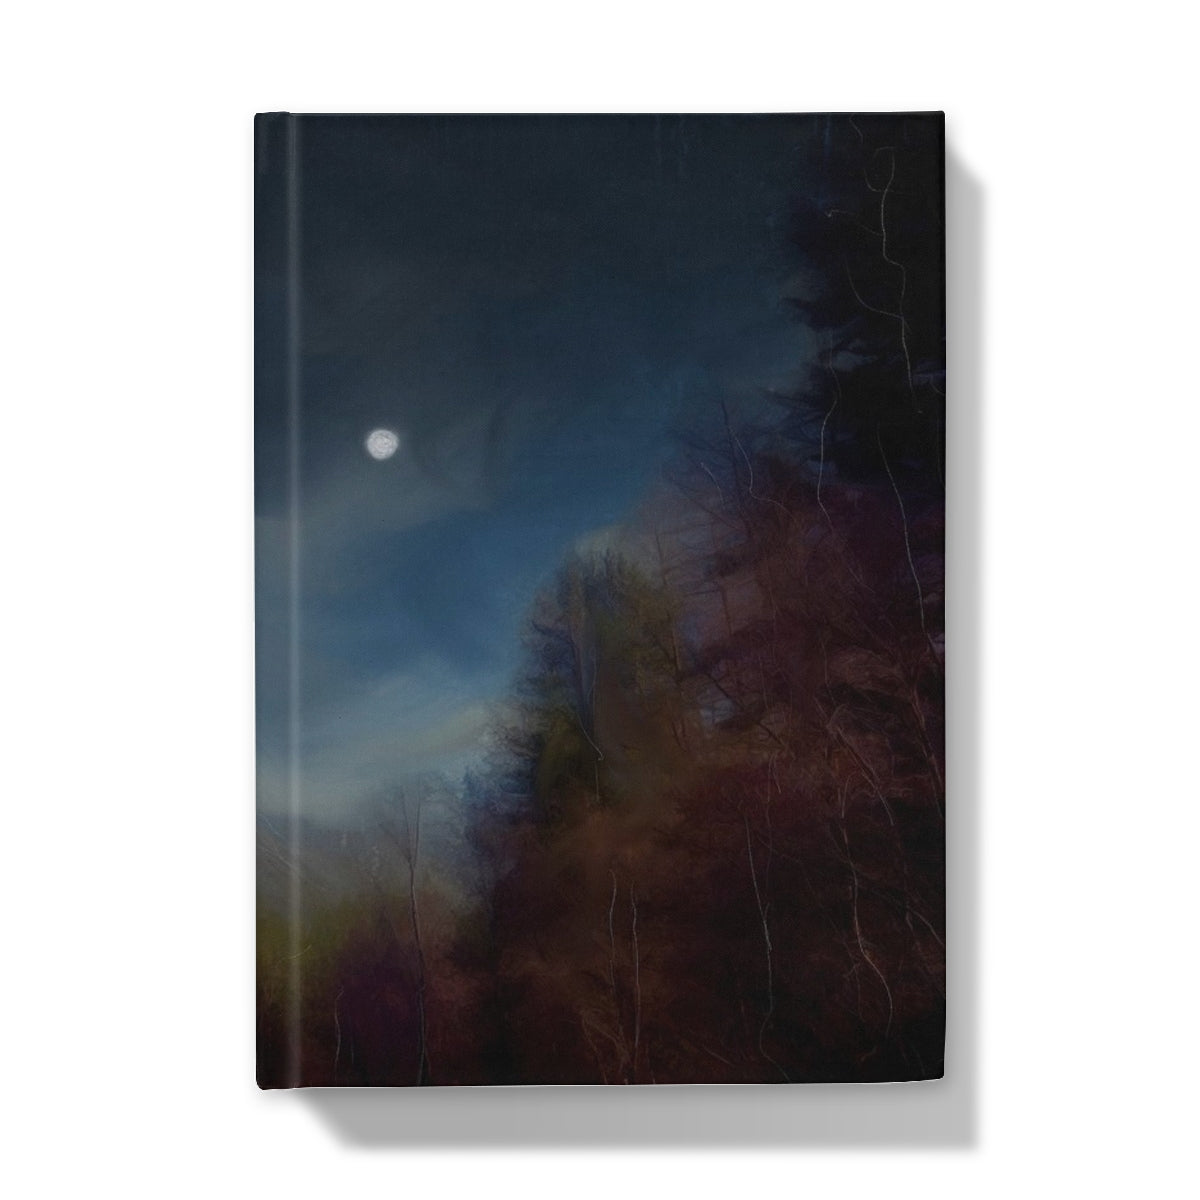 Glencoe Lochan Moonlight Art Gifts Hardback Journal-Journals & Notebooks-Scottish Lochs & Mountains Art Gallery-A4-Plain-Paintings, Prints, Homeware, Art Gifts From Scotland By Scottish Artist Kevin Hunter